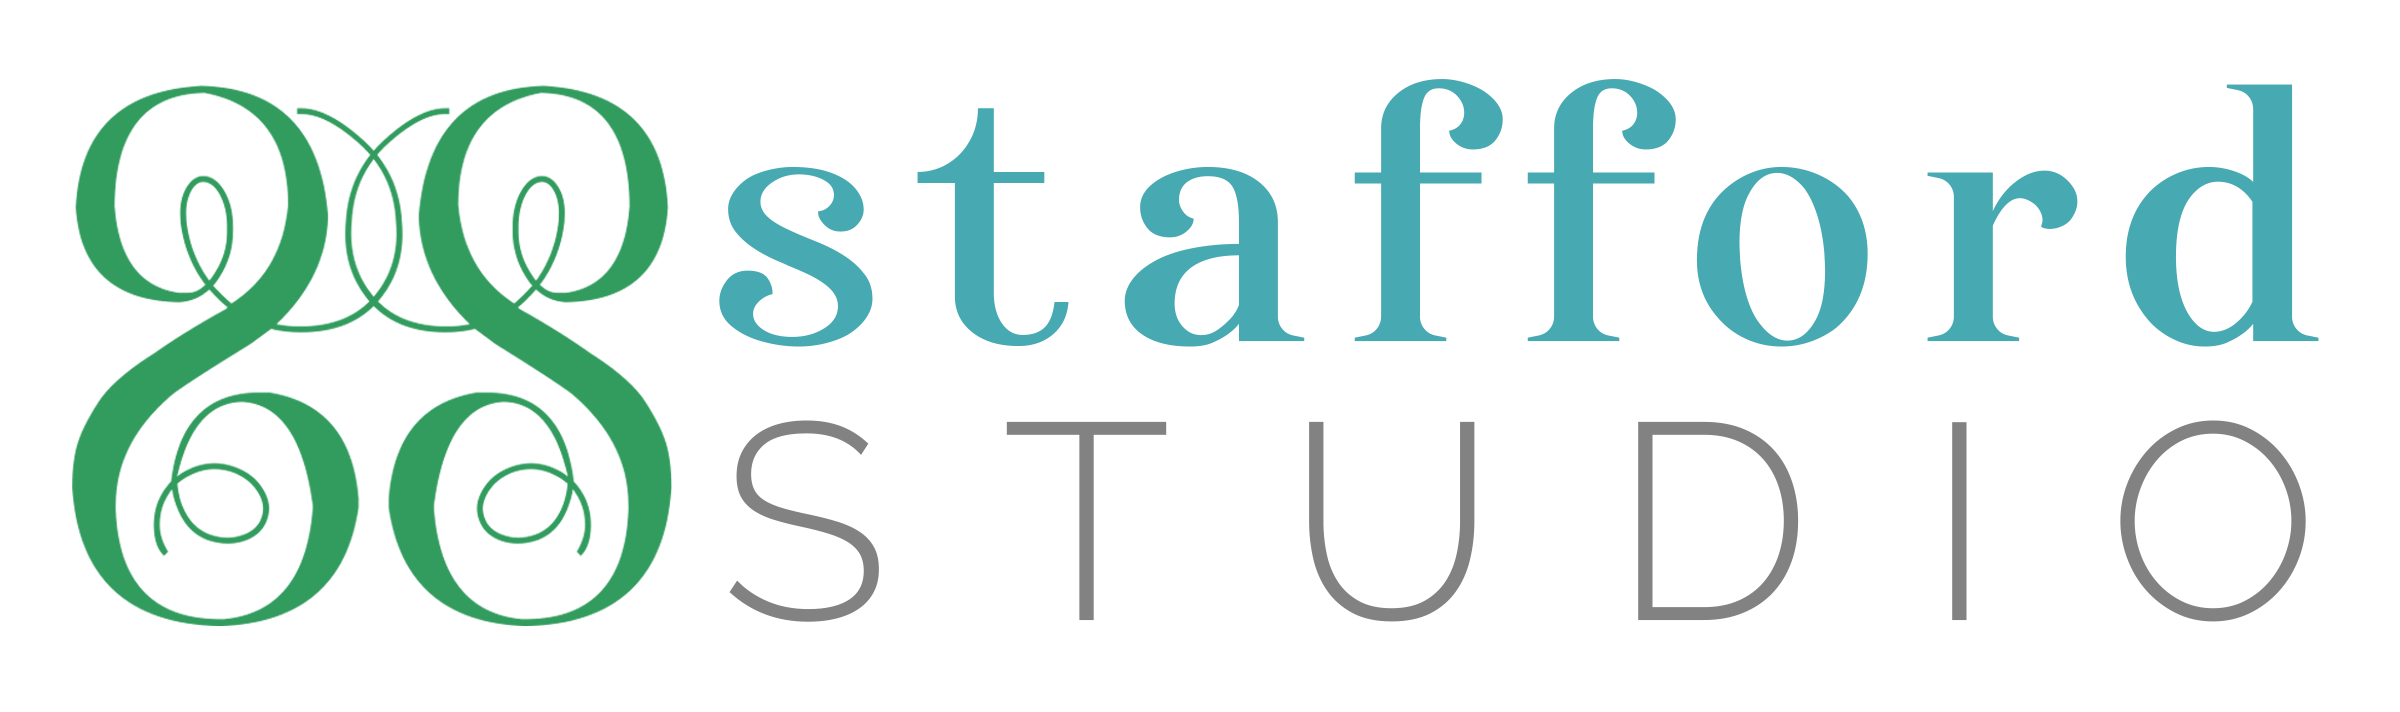 Stafford Studio